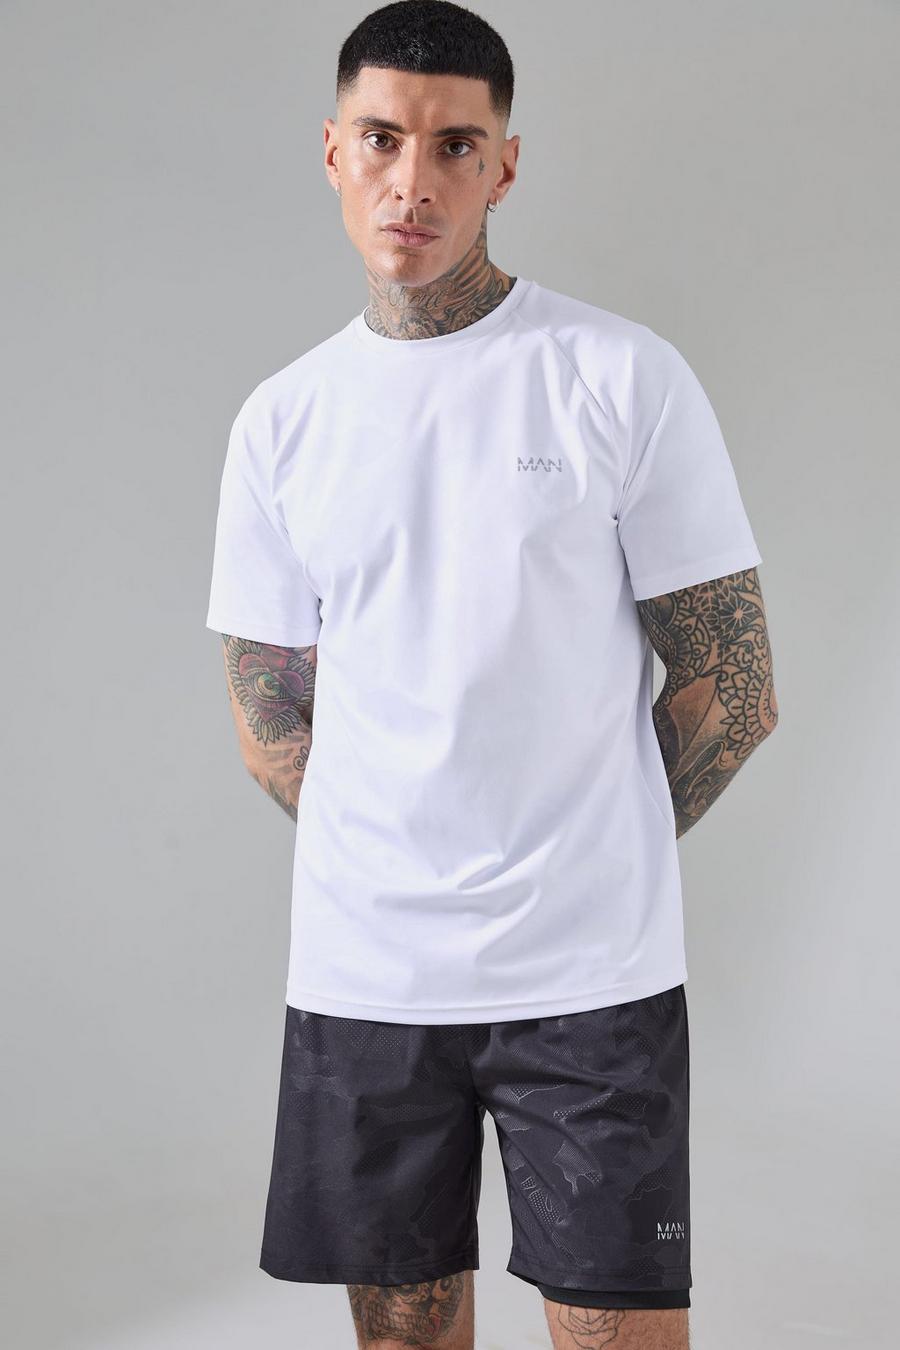 Tall Man Active Camouflage Raglan Performance T-Shirt, White